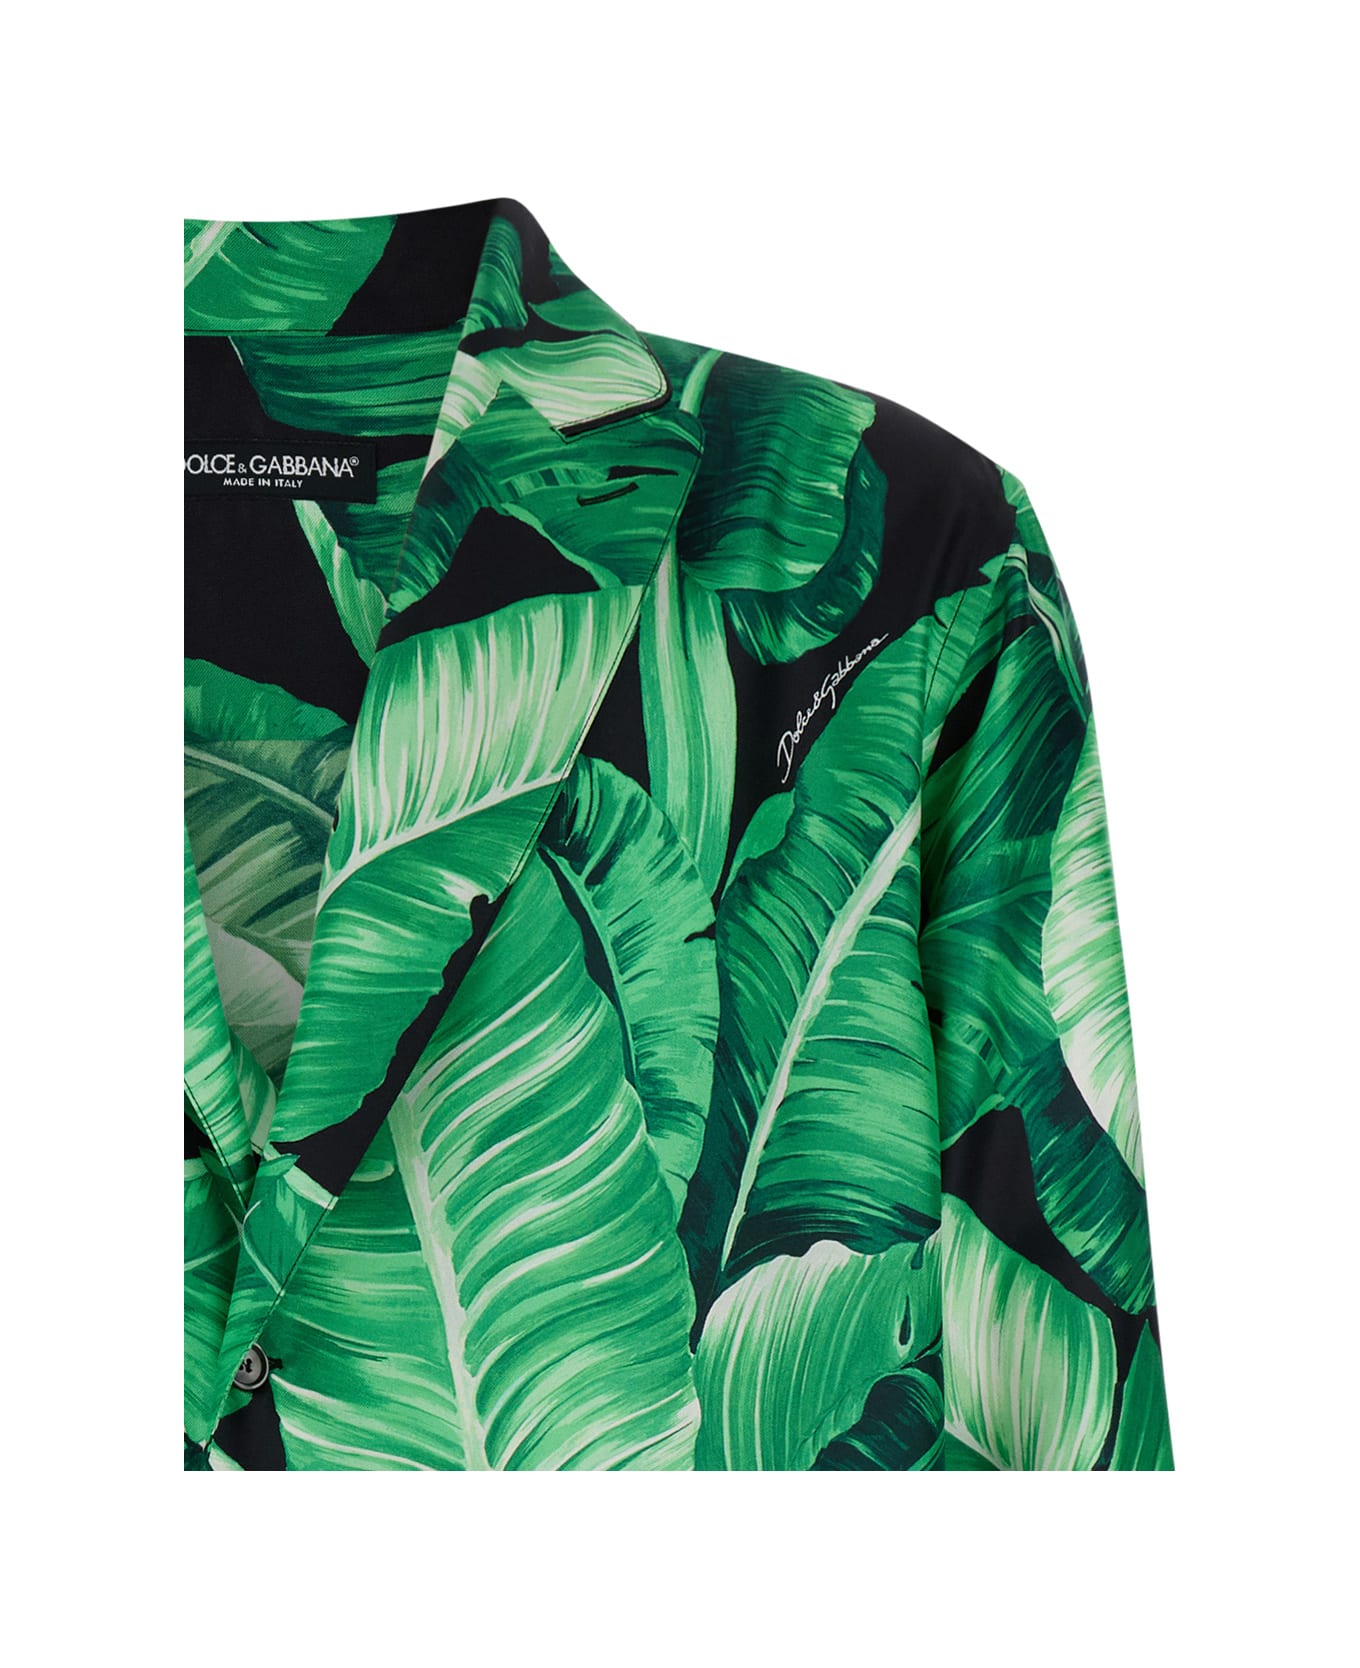 Dolce & Gabbana Black & Green Leaf Print Shirt In Silk Man - Black